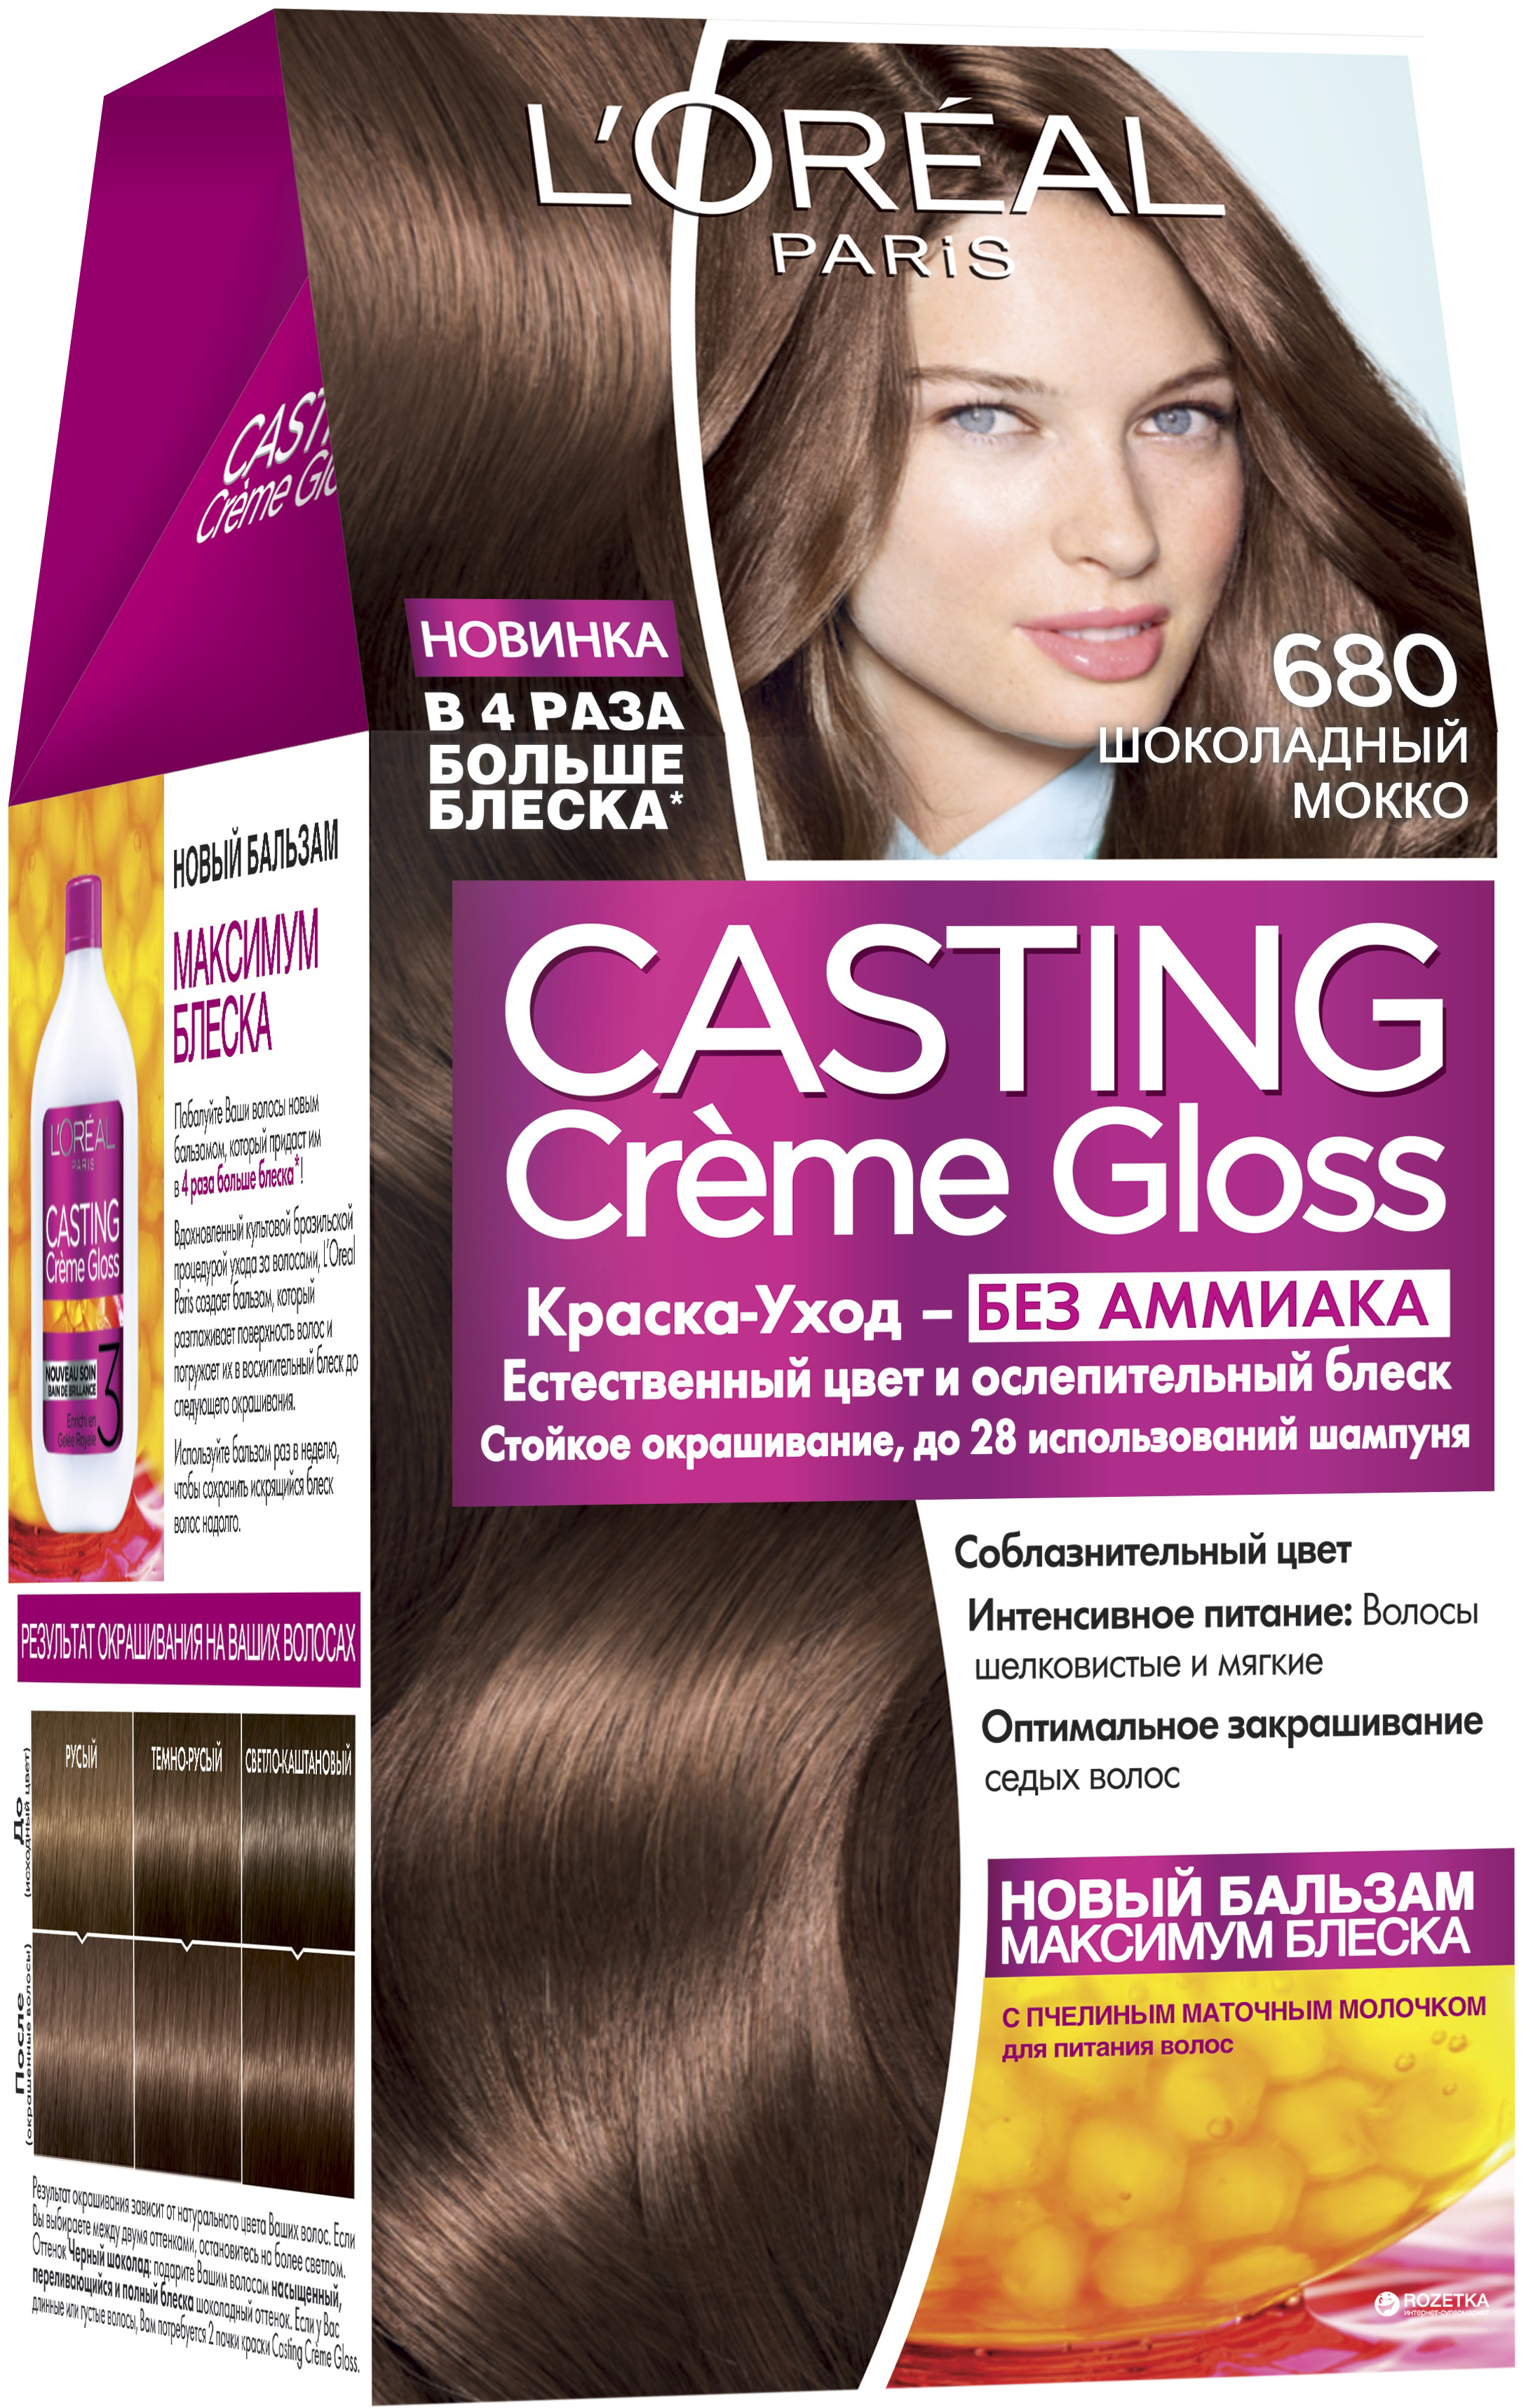 L'Oreal краска для волос casting Creme Gloss 5102 Холодное мокко